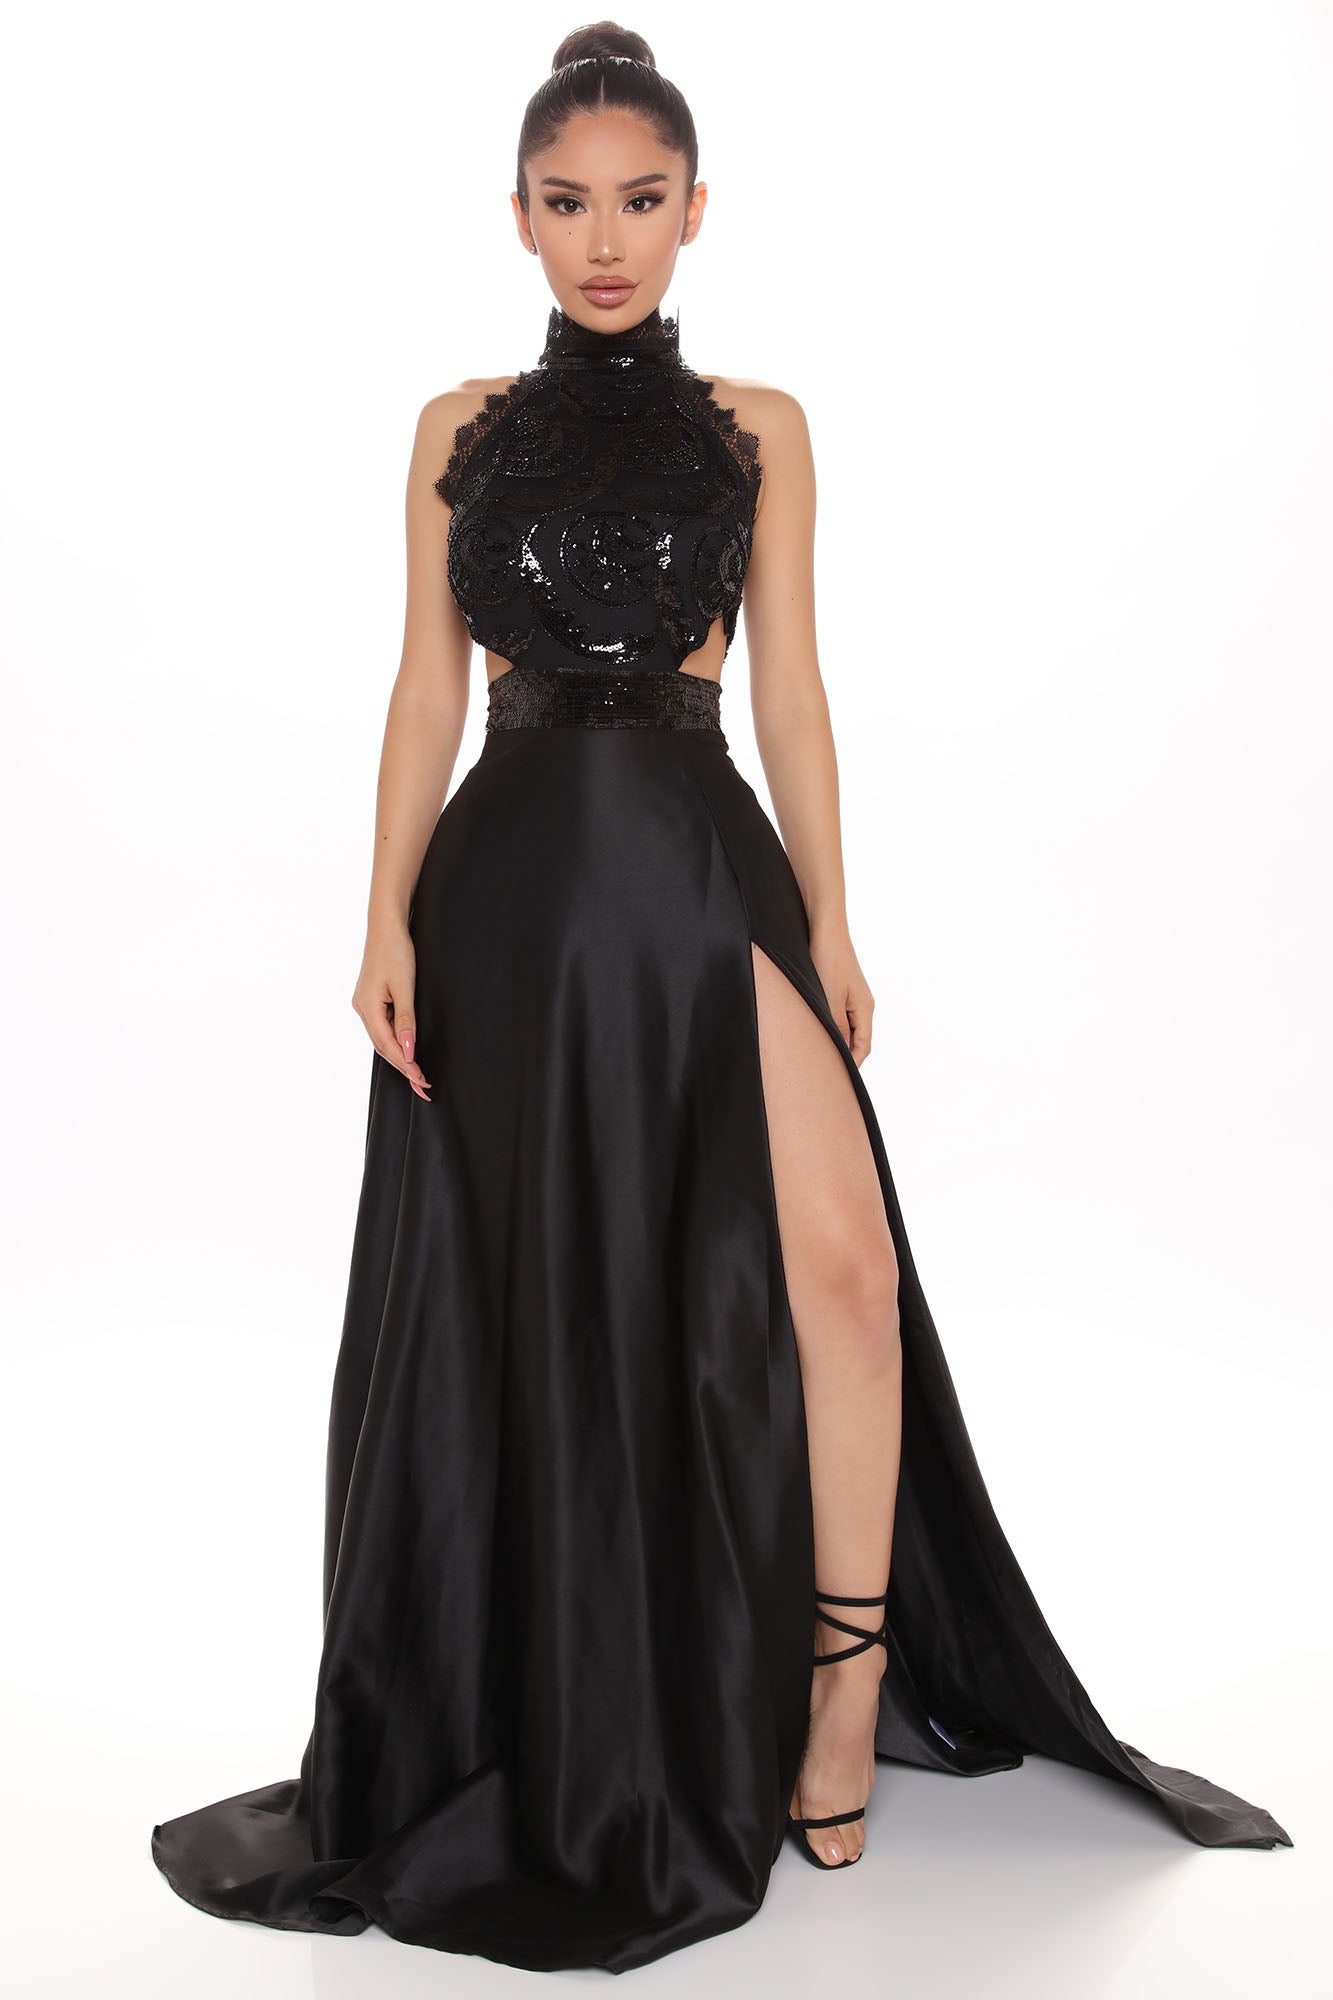 Plus Size Black Wedding Dress Ideas For Curvy Brides + FAQs